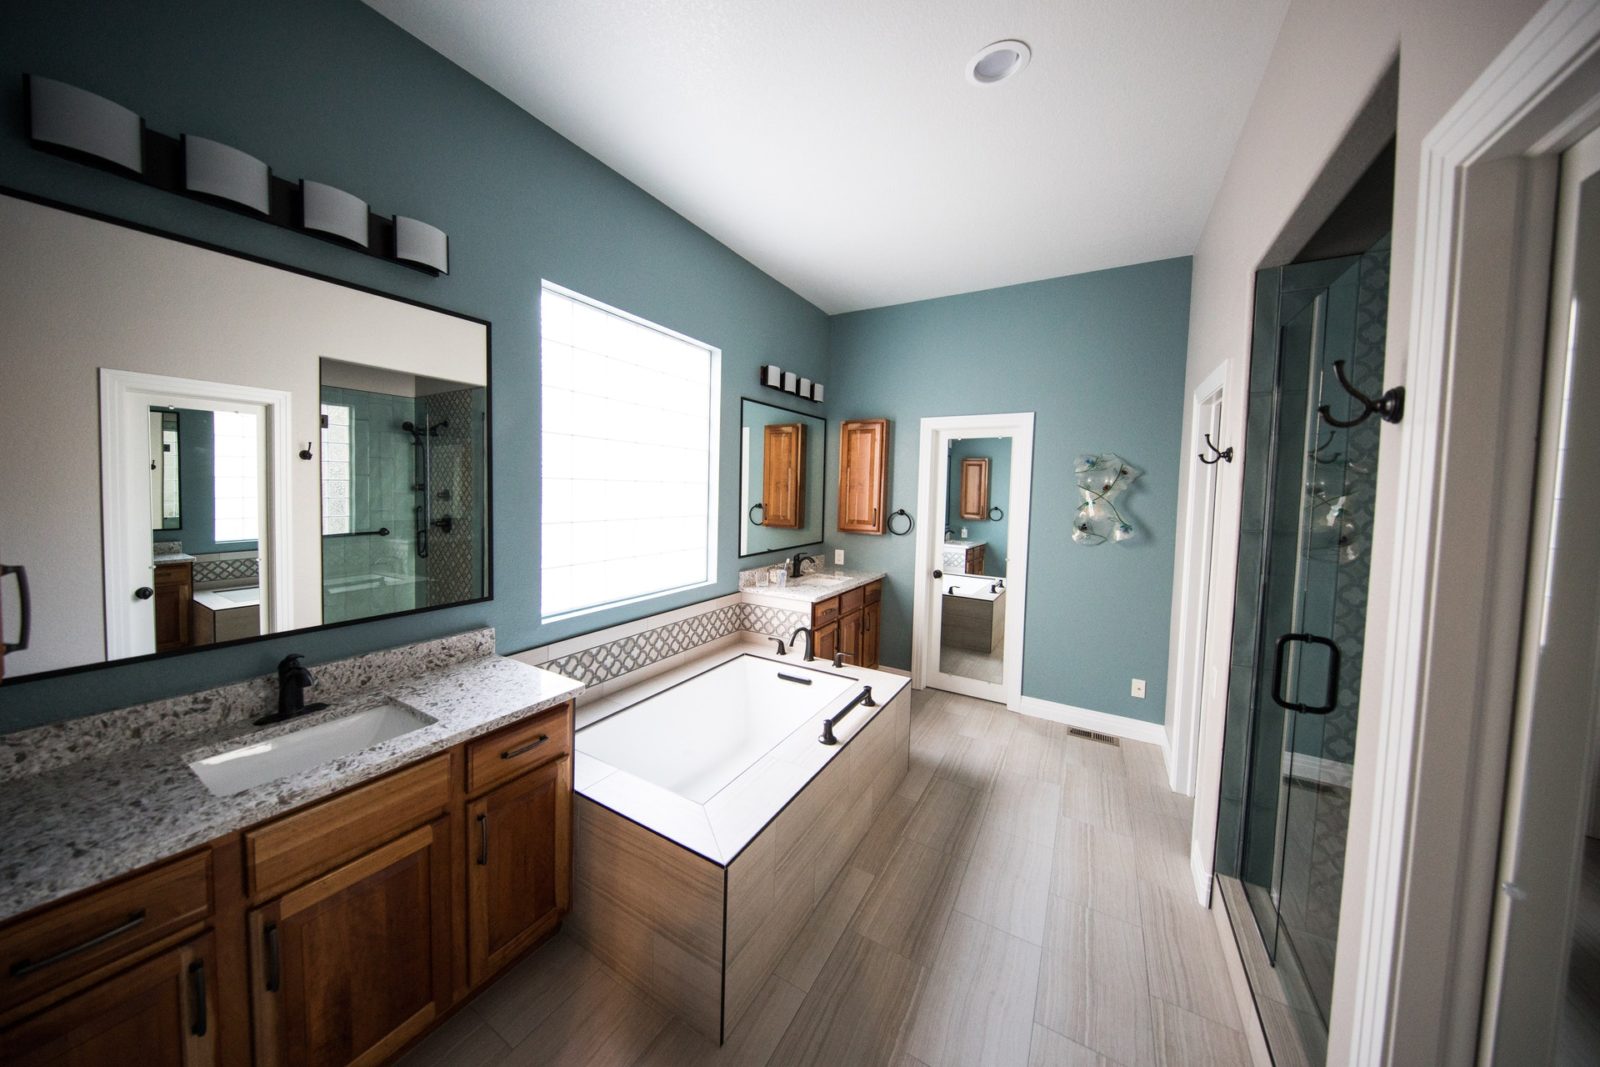 simple traditional bathroom remodel garden tub blue walls light tile flooring large vanity